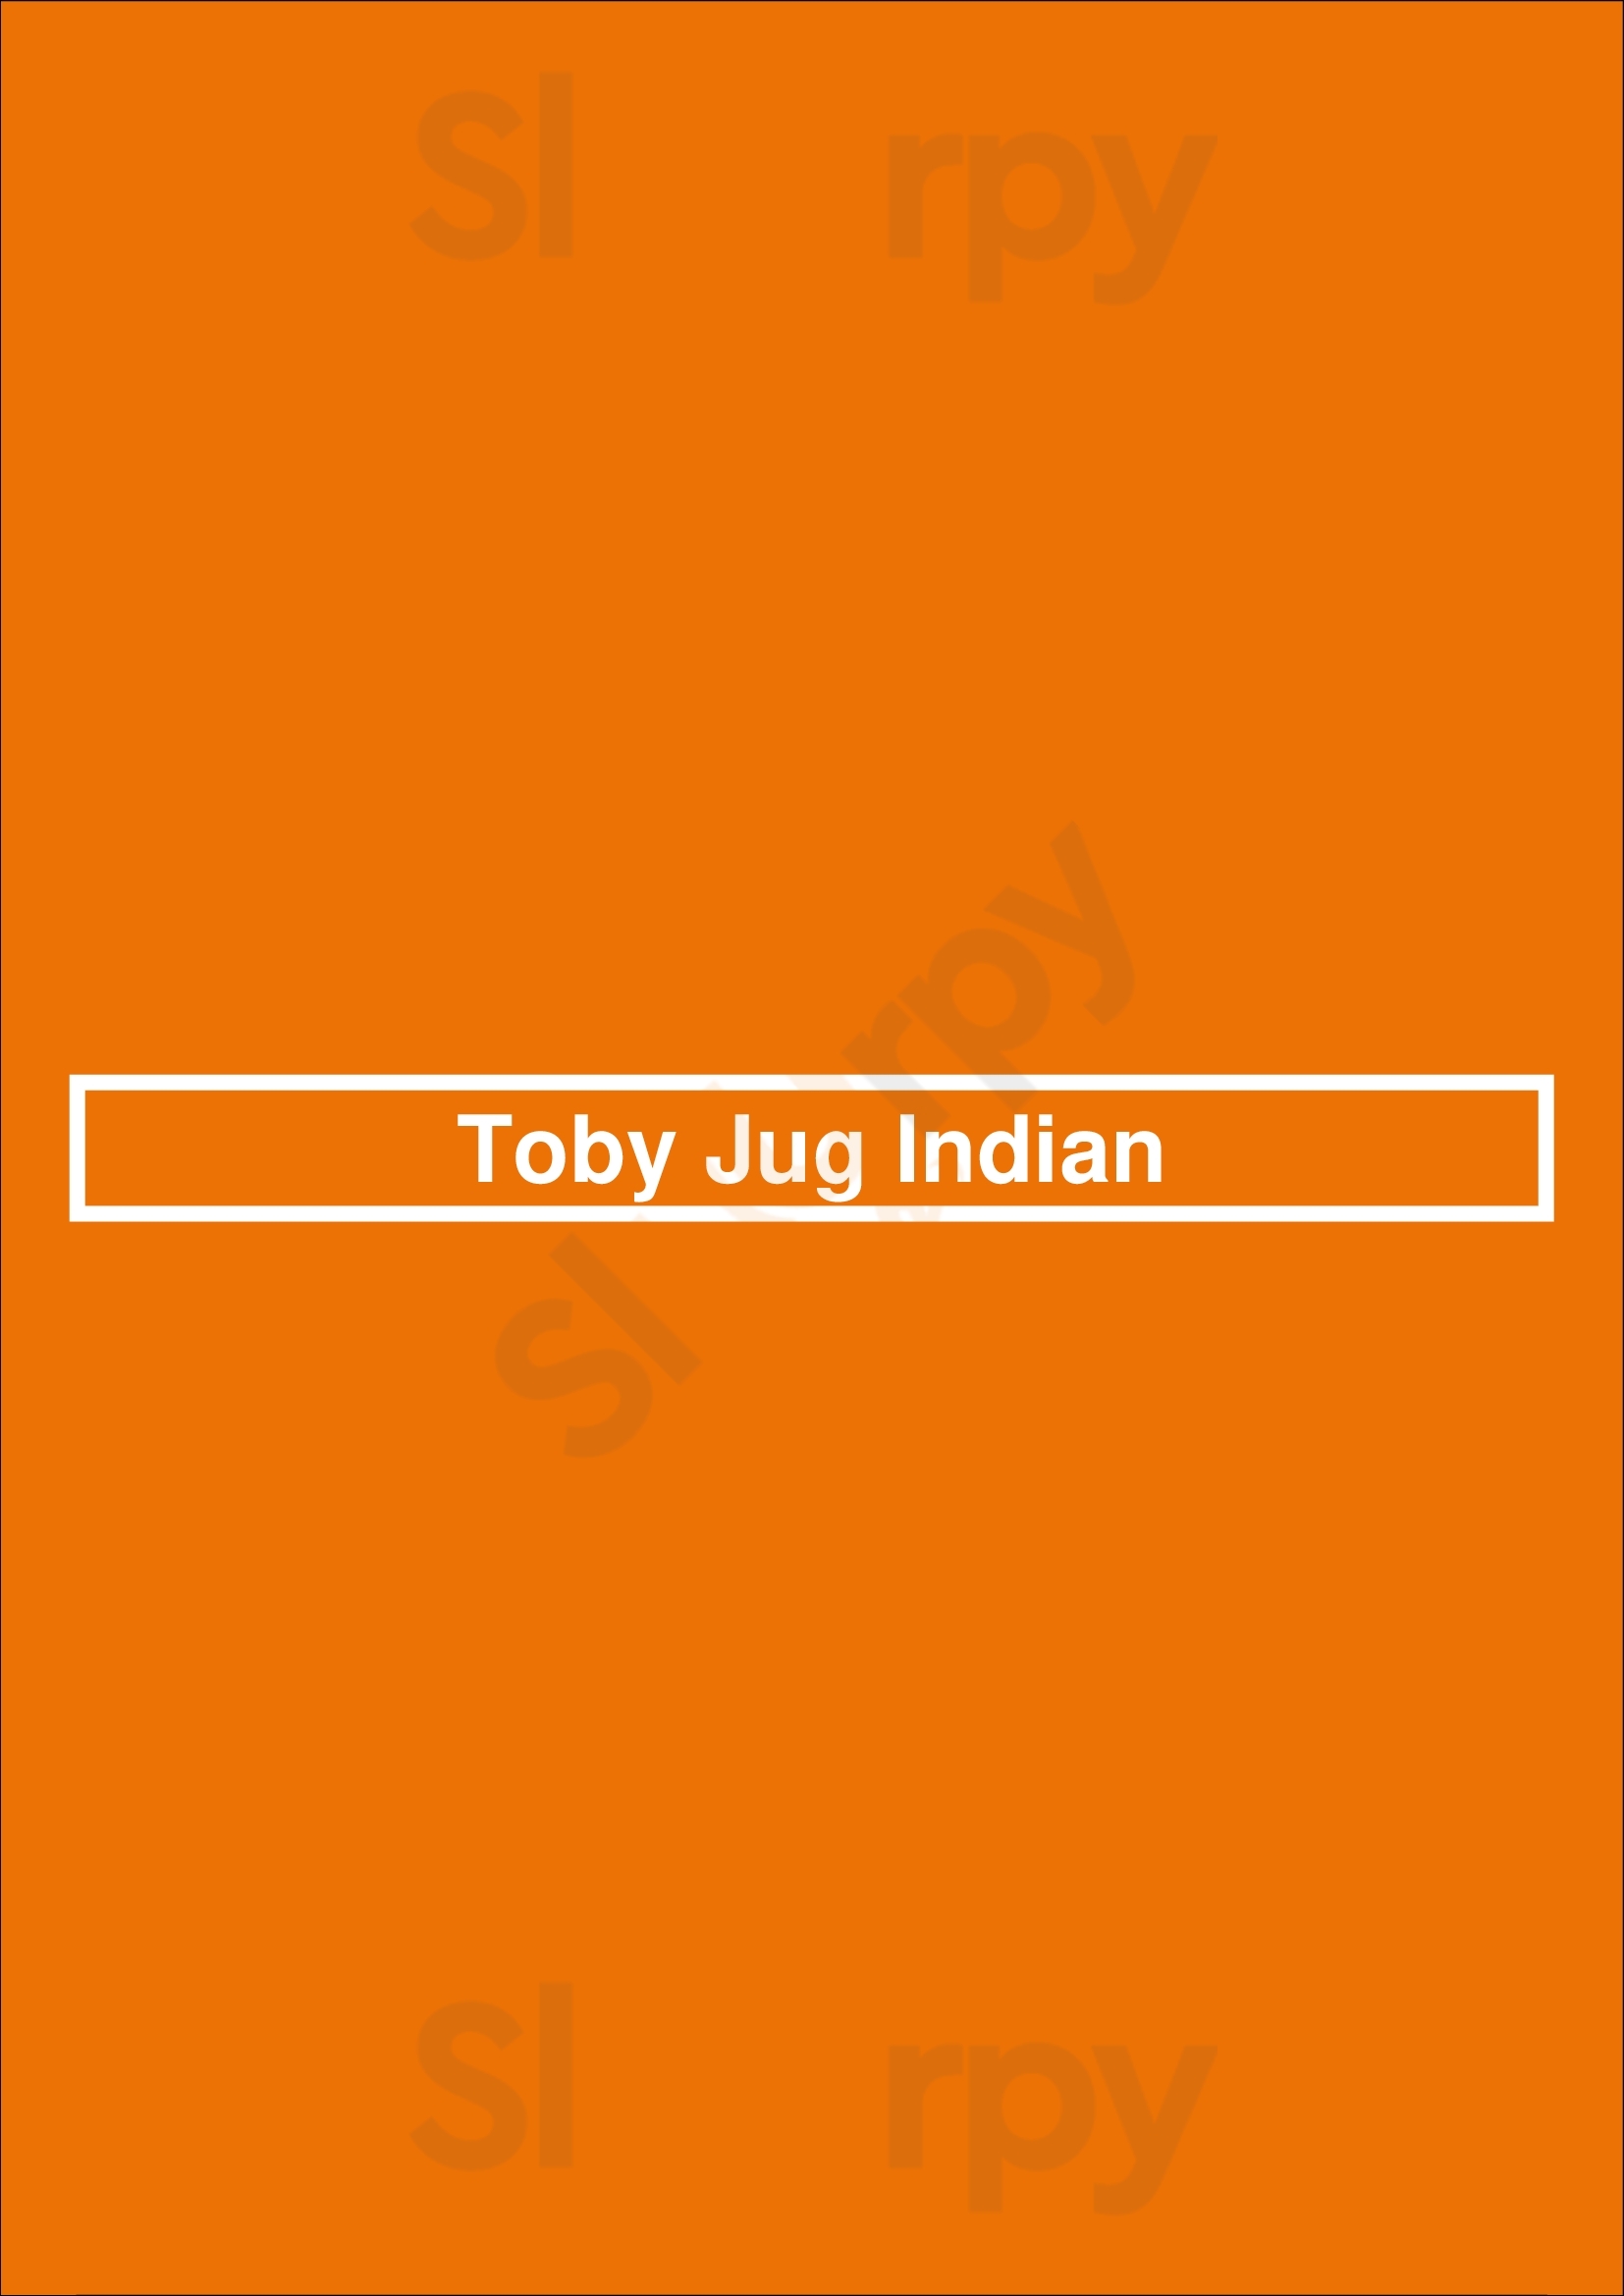 Toby Jug Indian Birmingham Menu - 1